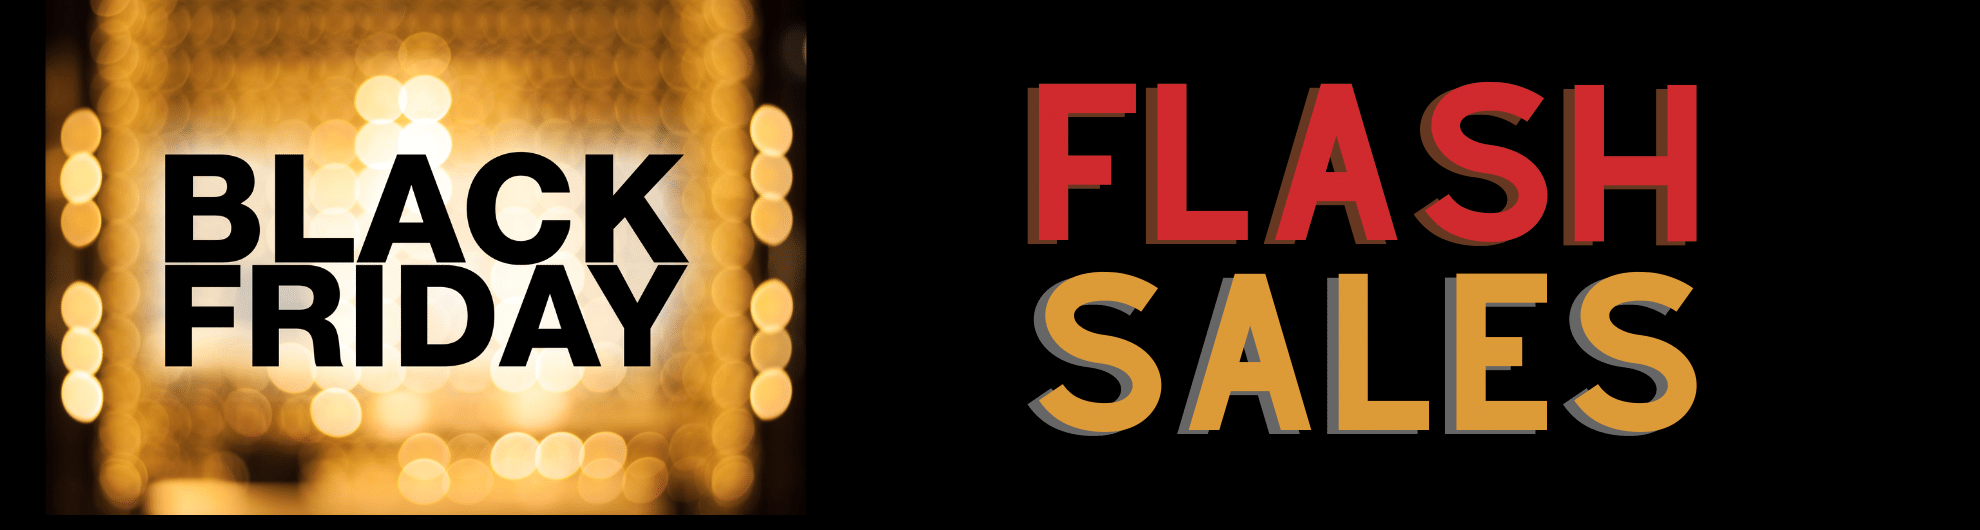 Black Friday Flash Sales